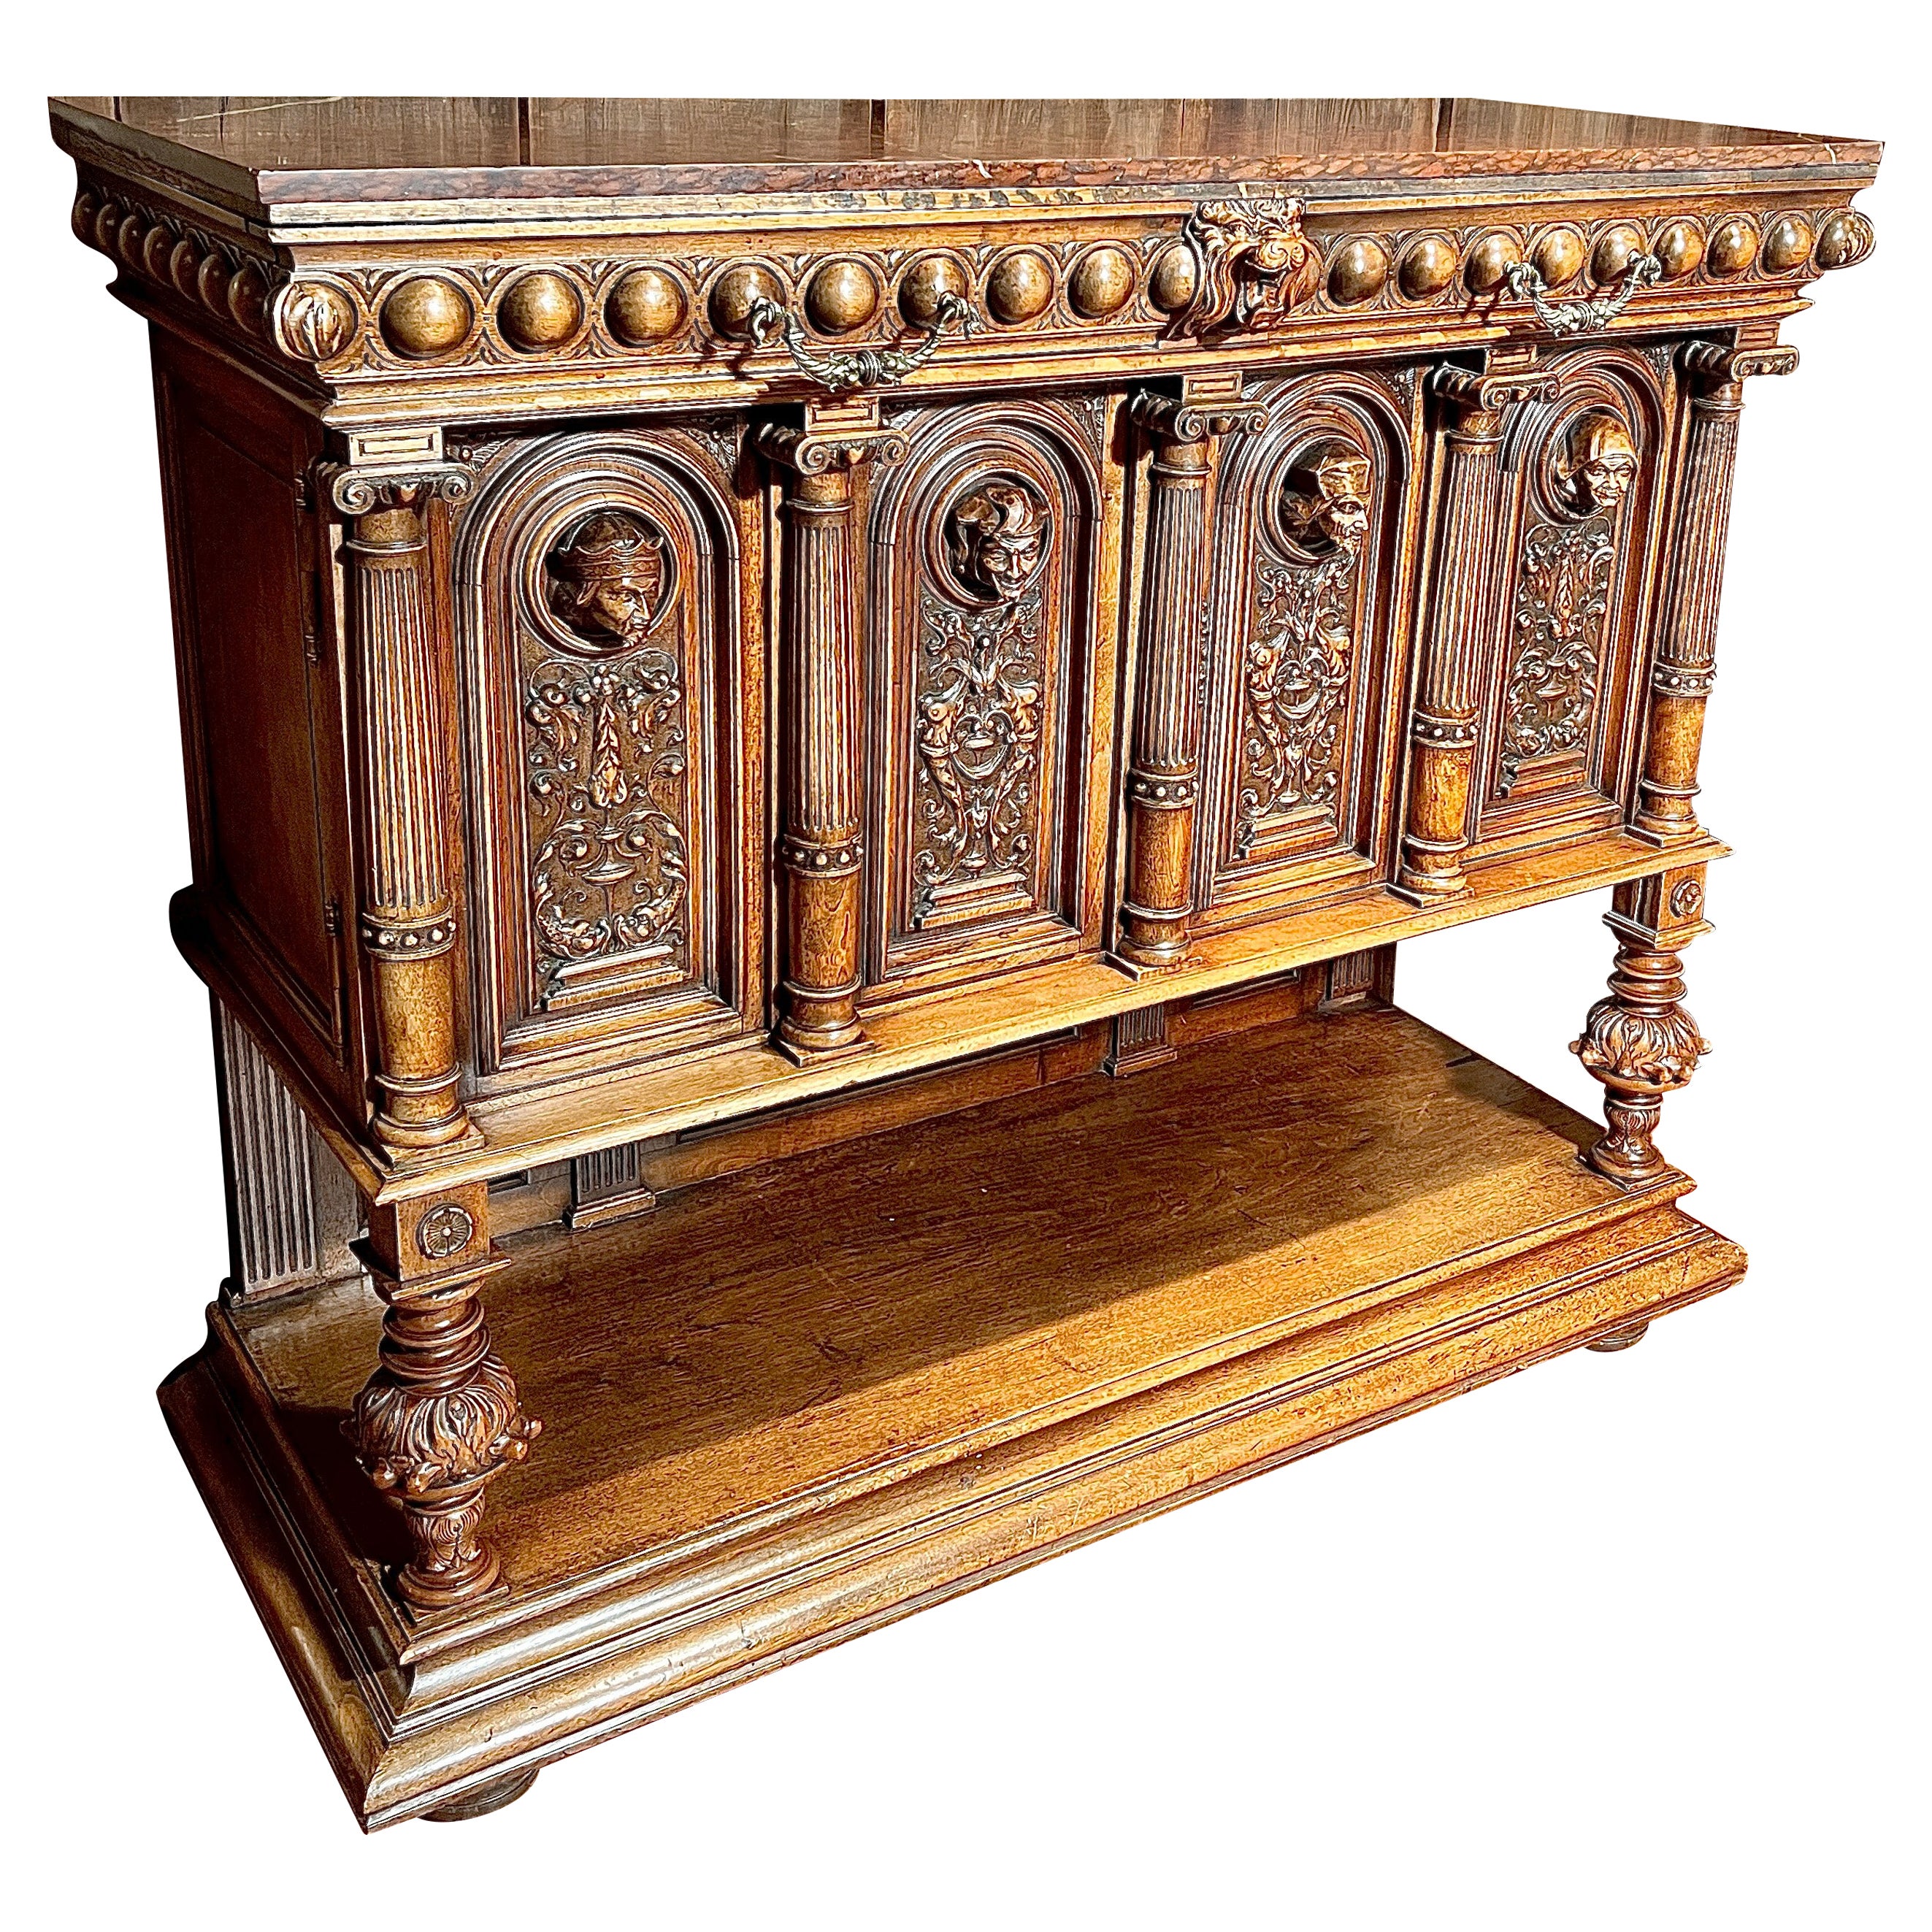 Antique French Francois Premier Marble-Top Walnut Cabinet, "Renaissance" Carving For Sale